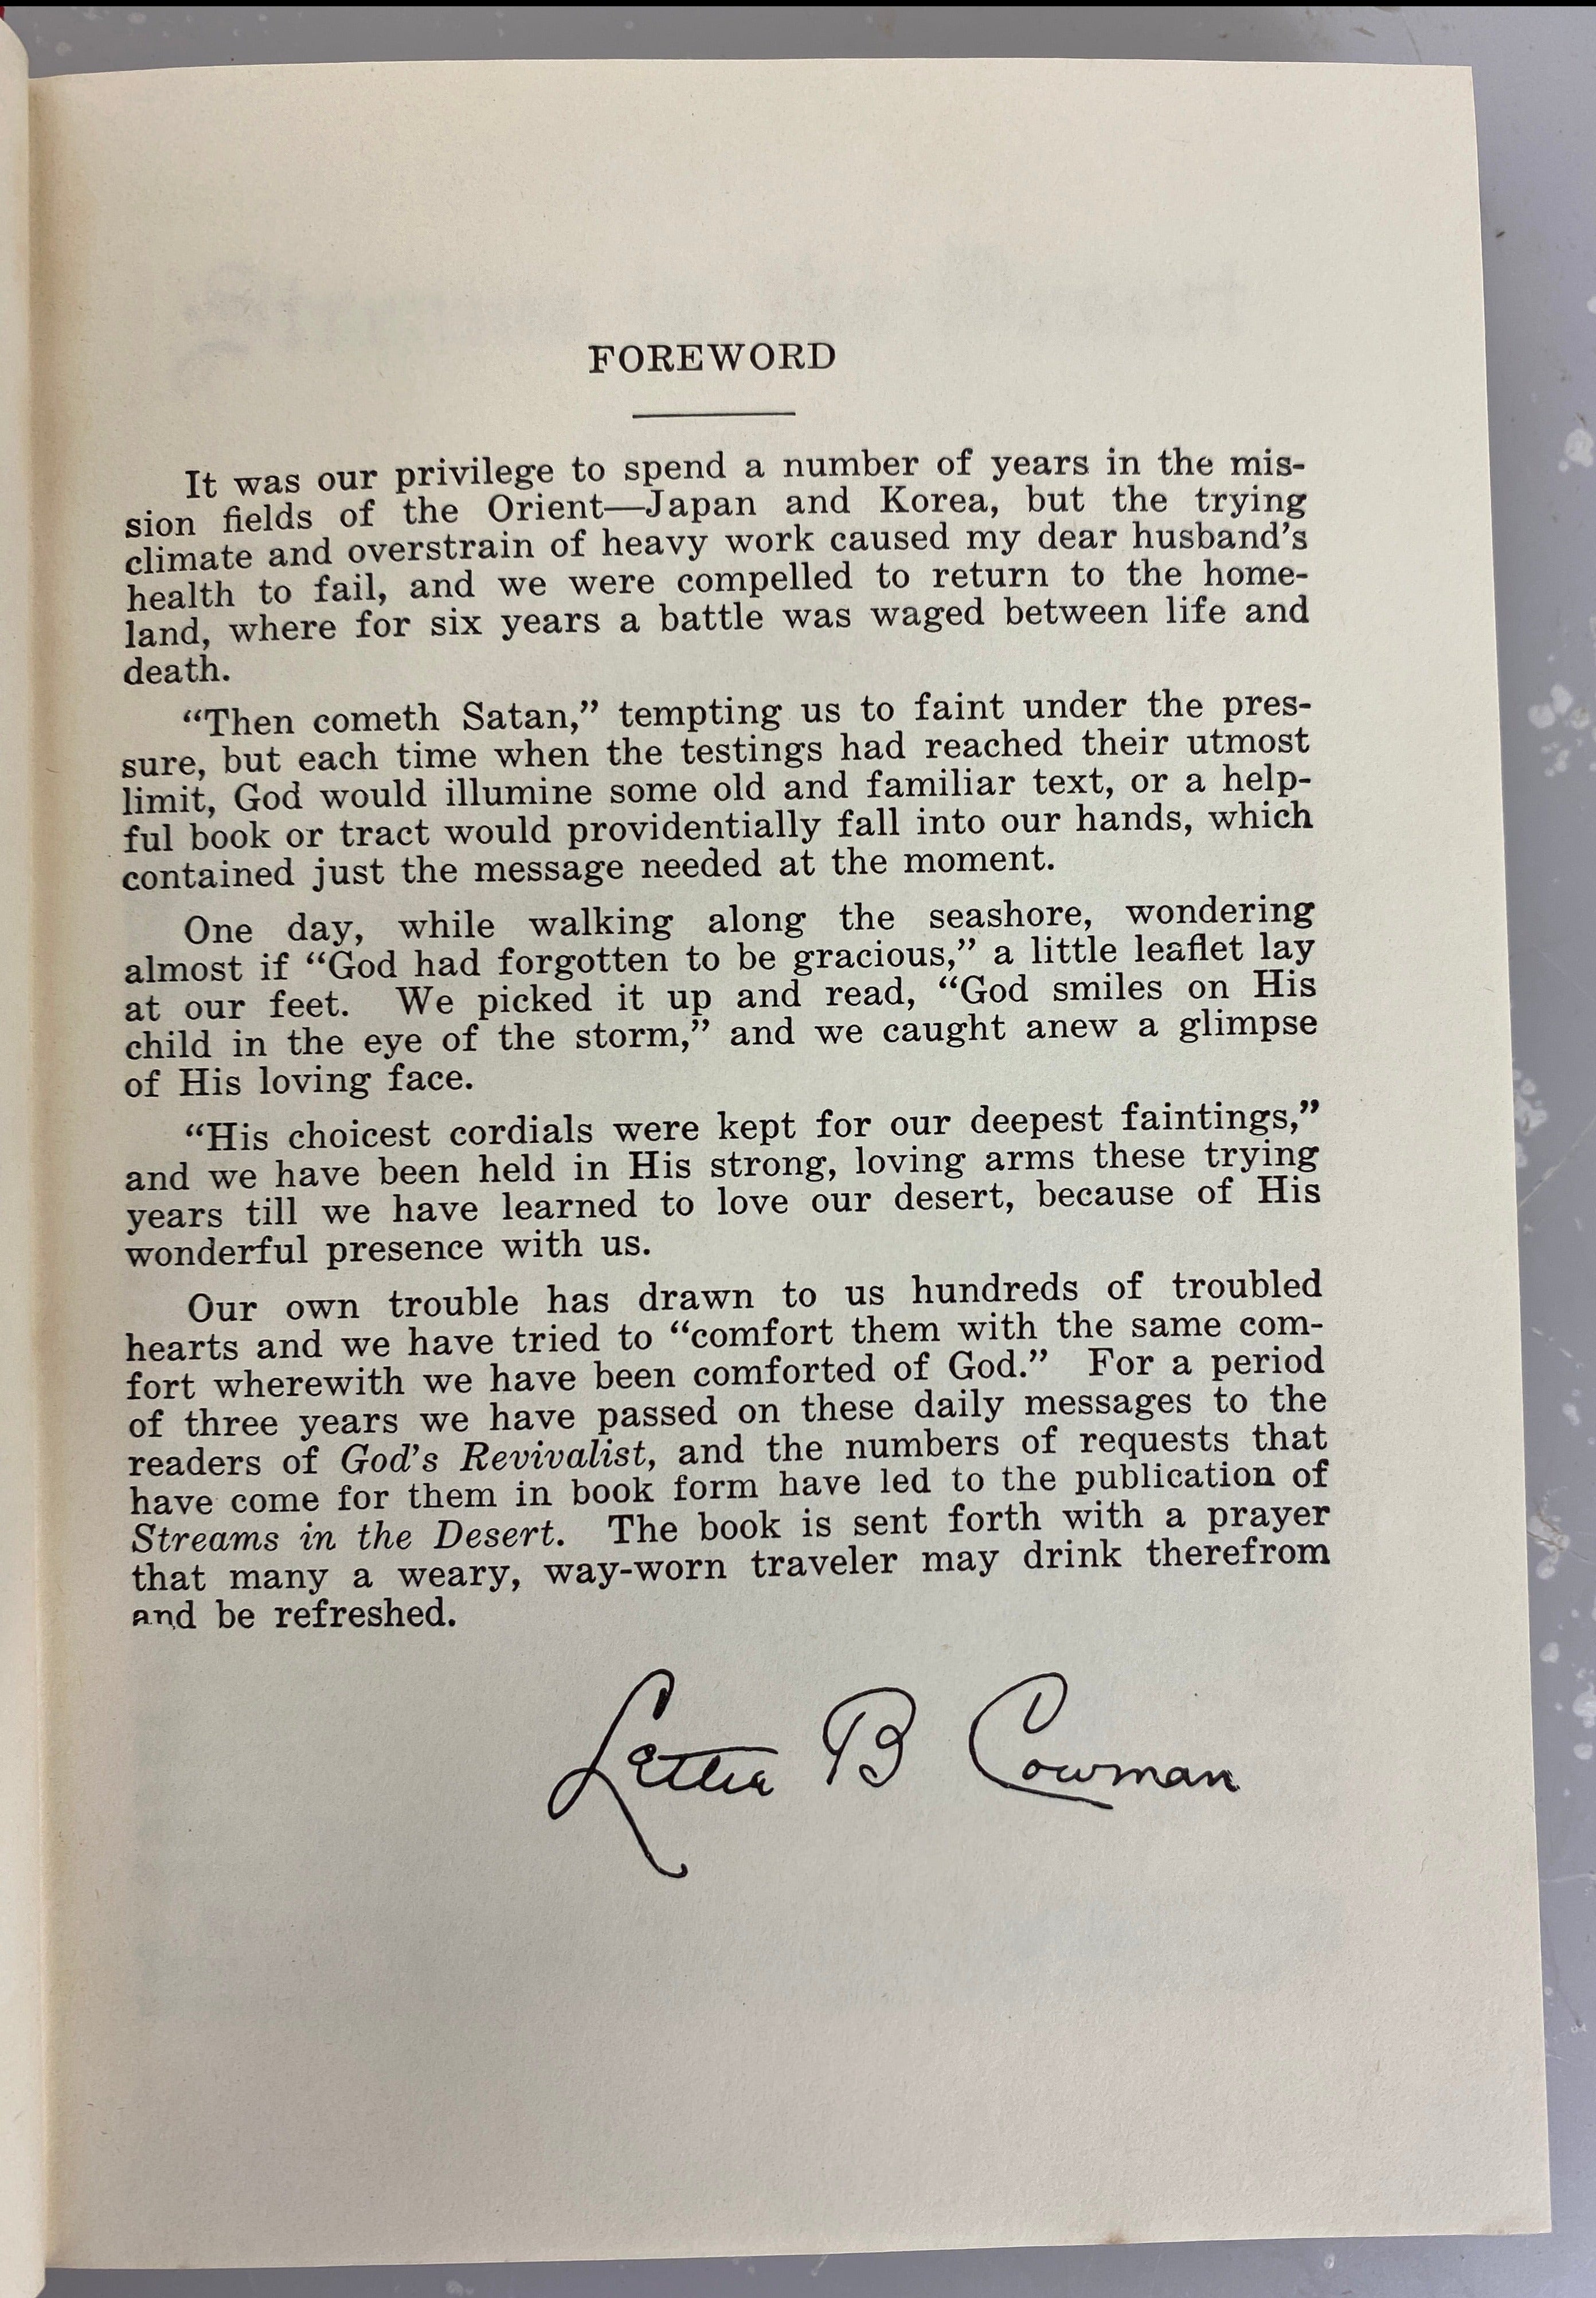 Streams in the Desert Mrs. Chas E. Cowman 1950 Cowman Publishing Company HC